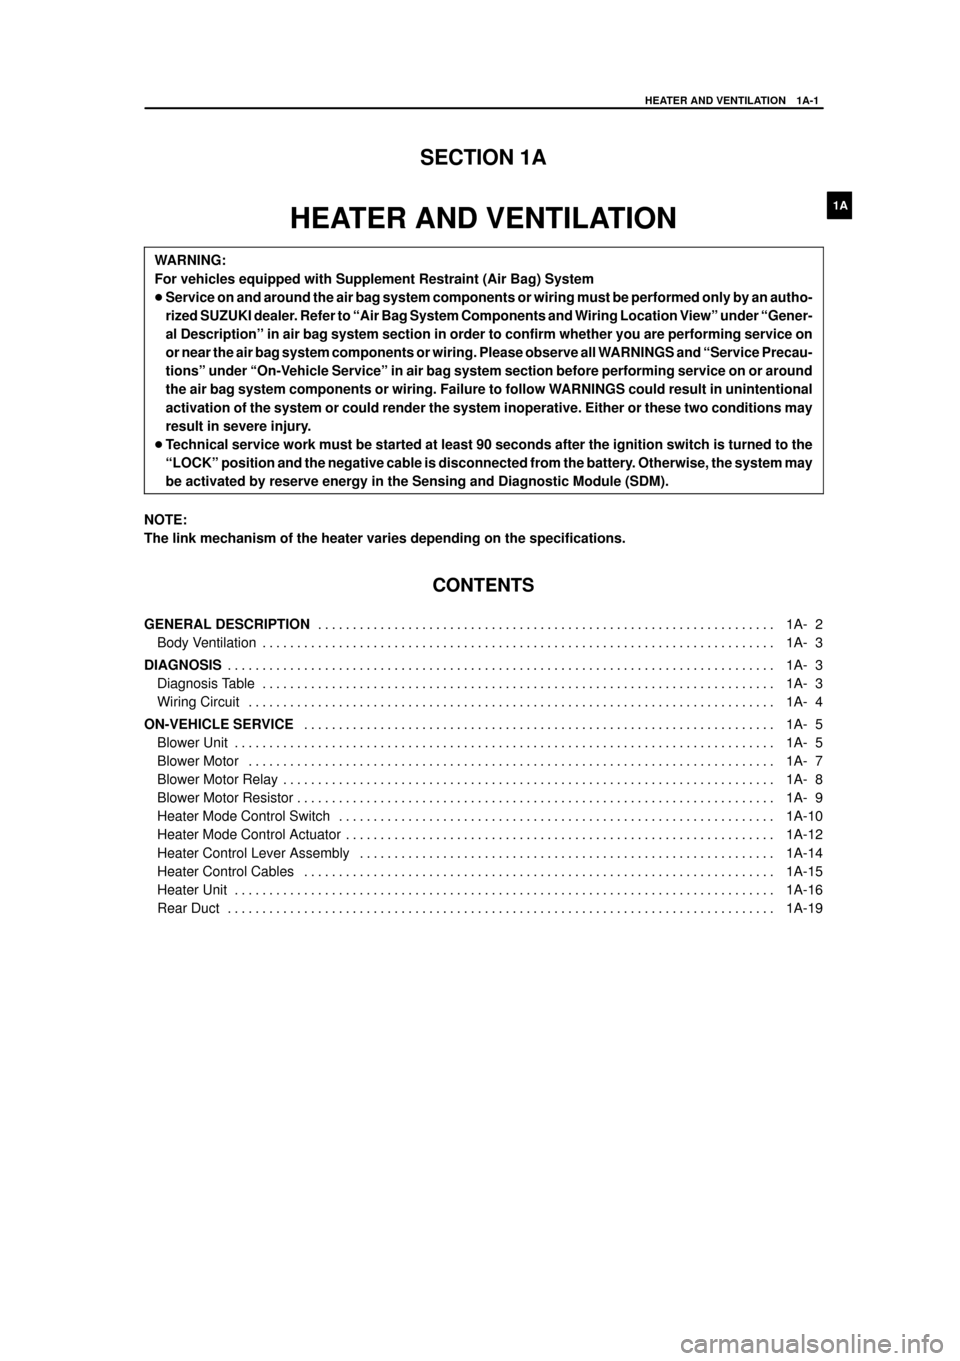 SUZUKI GRAND VITARA 2002 2.G Service Workshop Manual YH4
GRAND
VITARA
1A
HEATER AND VENTILATION 1A-1
SECTION 1A
HEATER AND VENTILATION
WARNING:
For vehicles equipped with Supplement Restraint (Air Bag) System
Service on and around the air bag system co